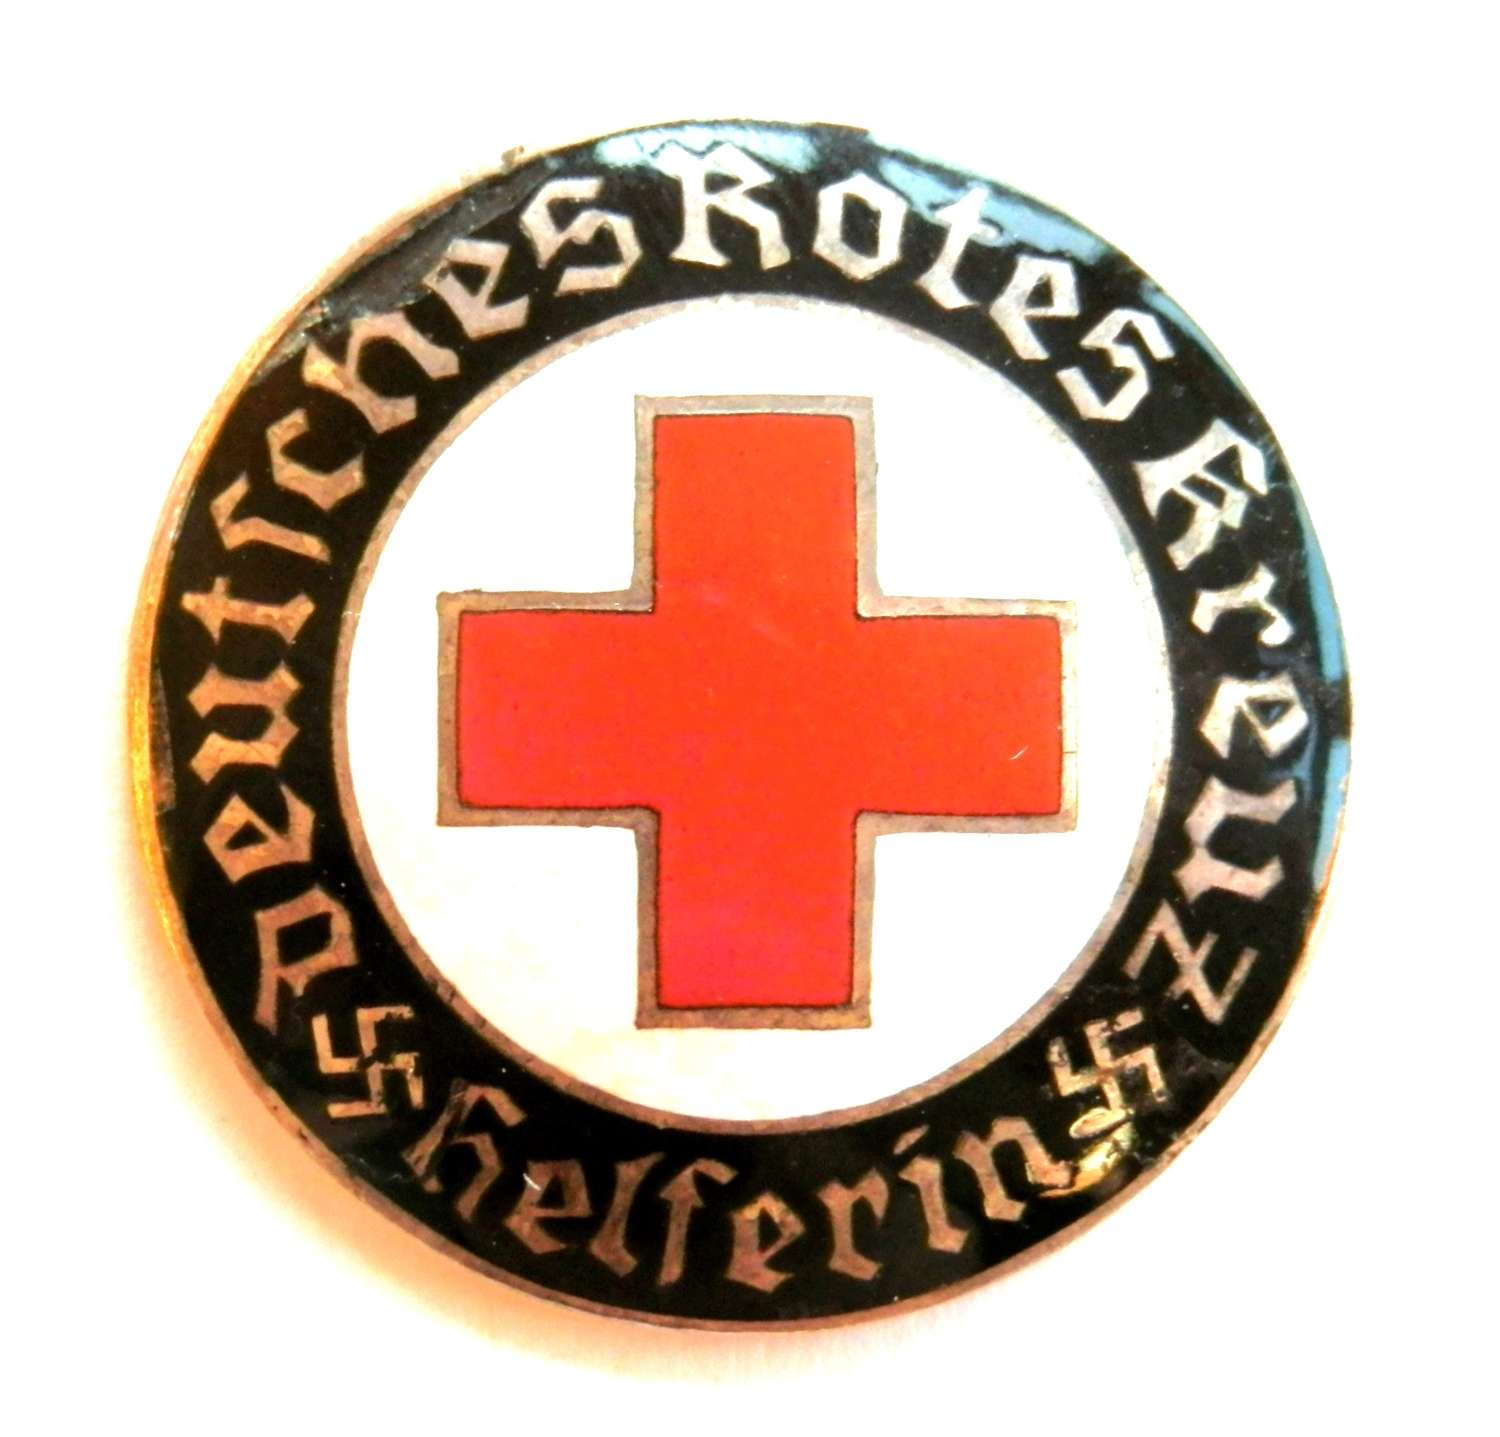 DRK (German Red Cross) service brooch.